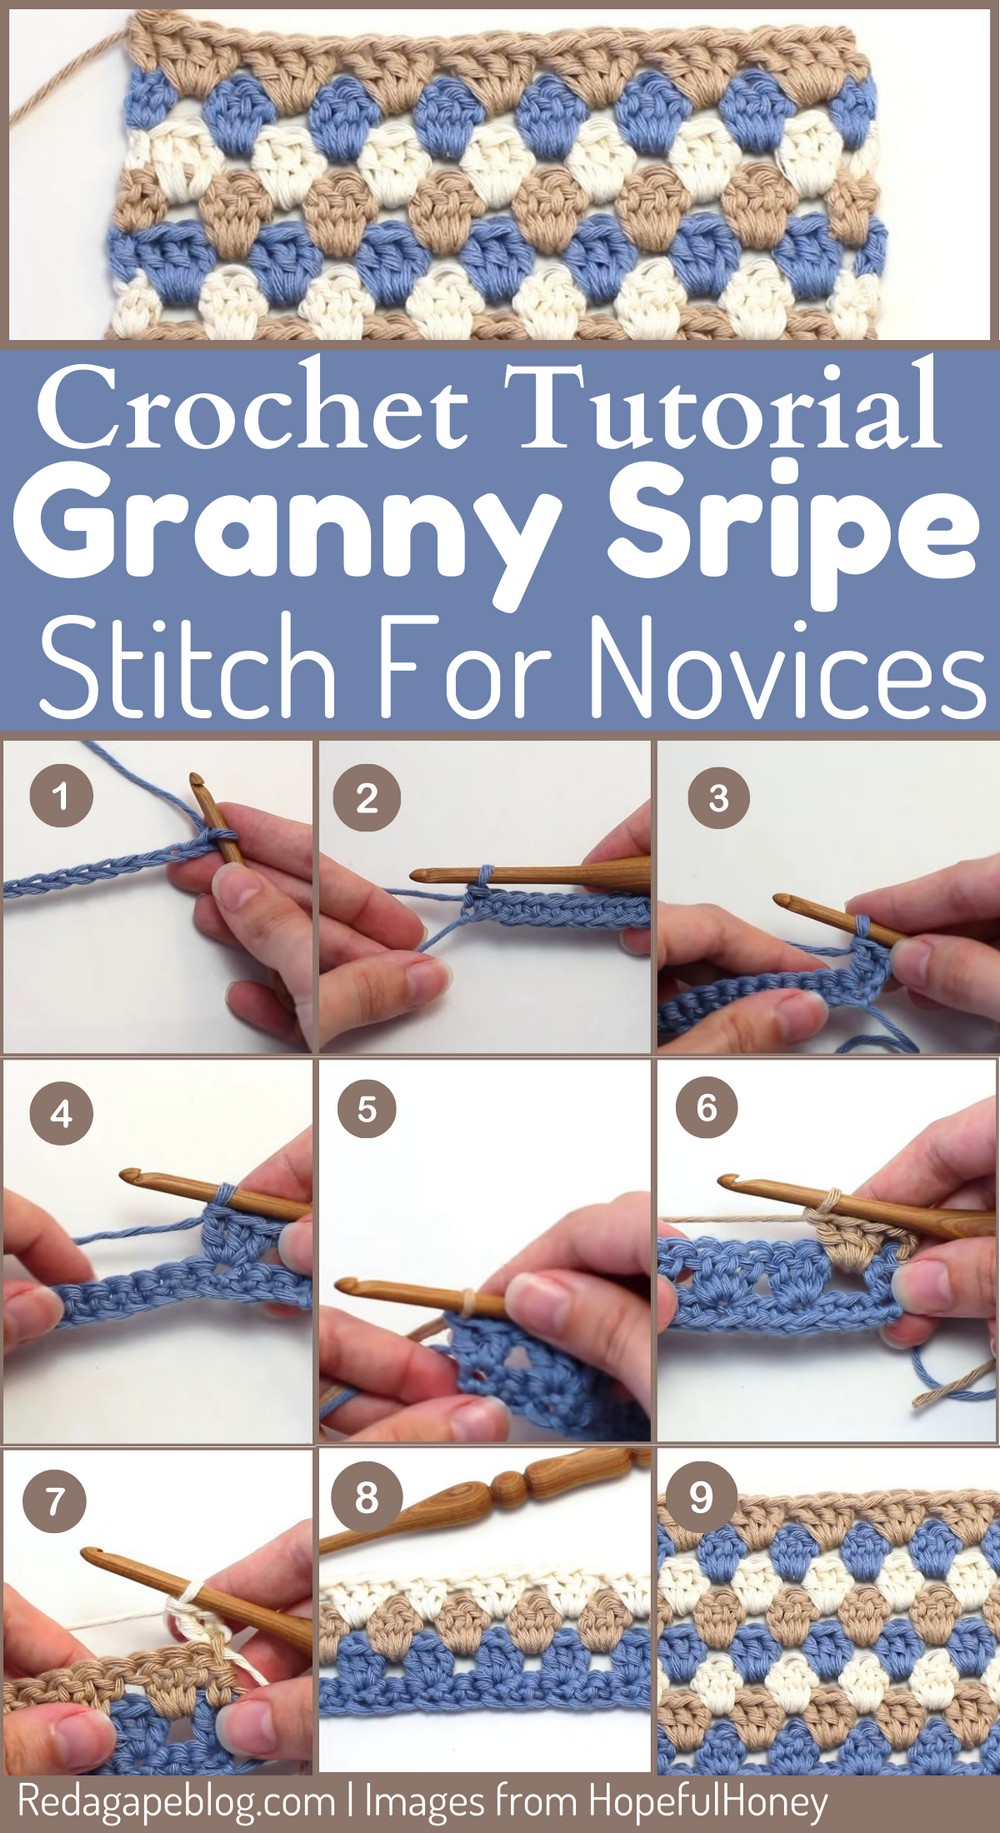 How to Crochet the Granny Stripe Stitch 